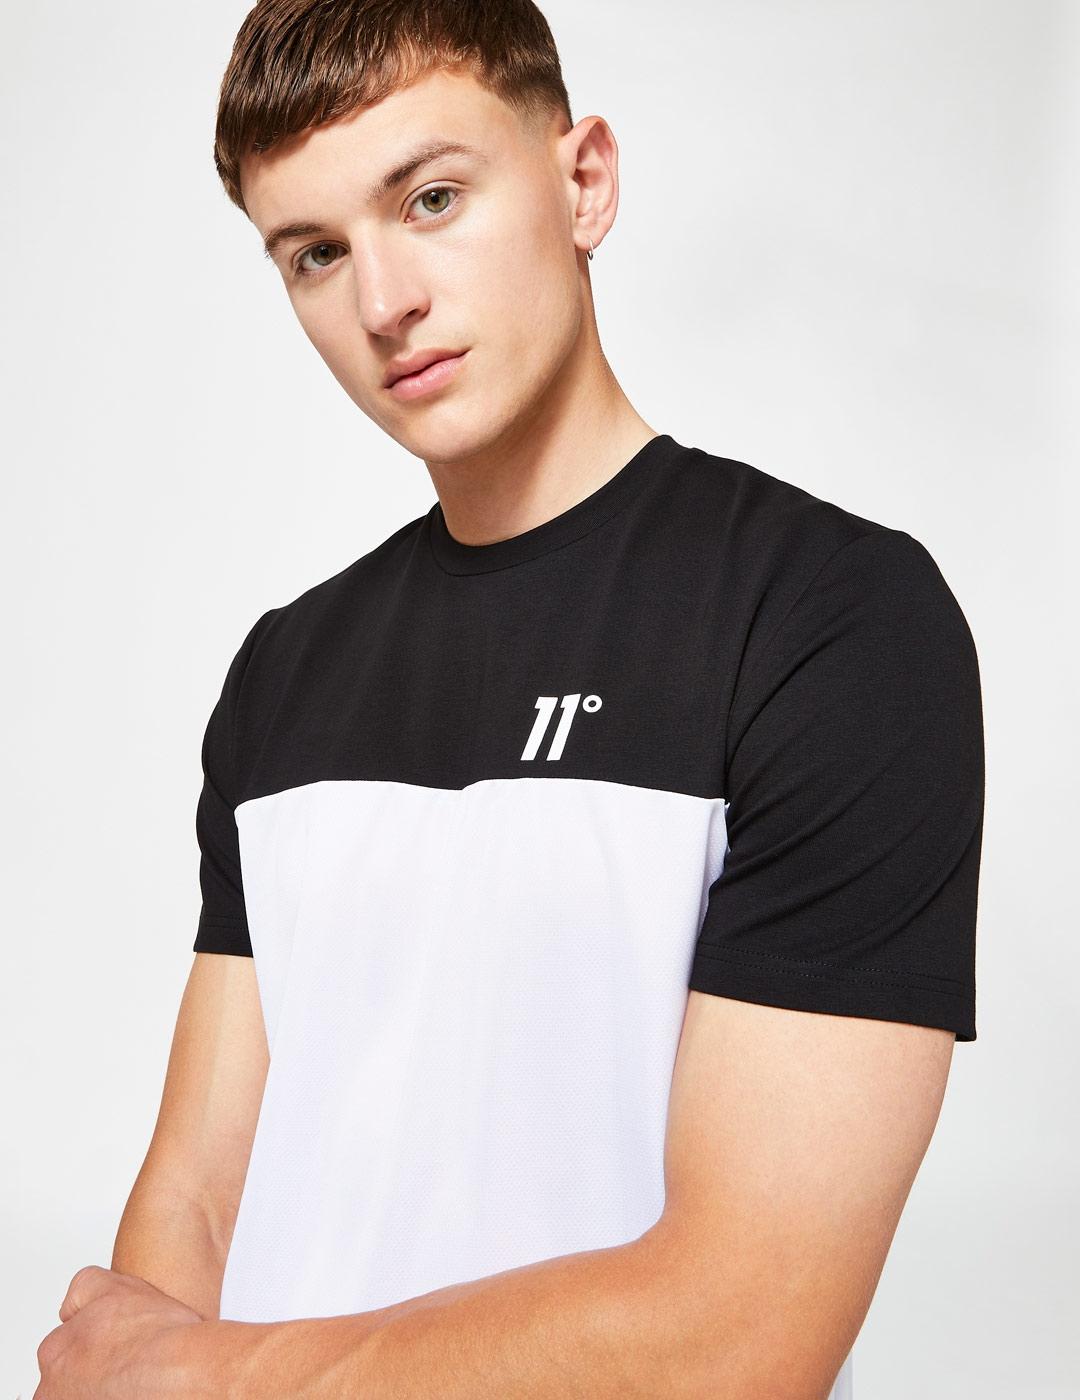 Camiseta TEXTURED BLOCK - White / Black